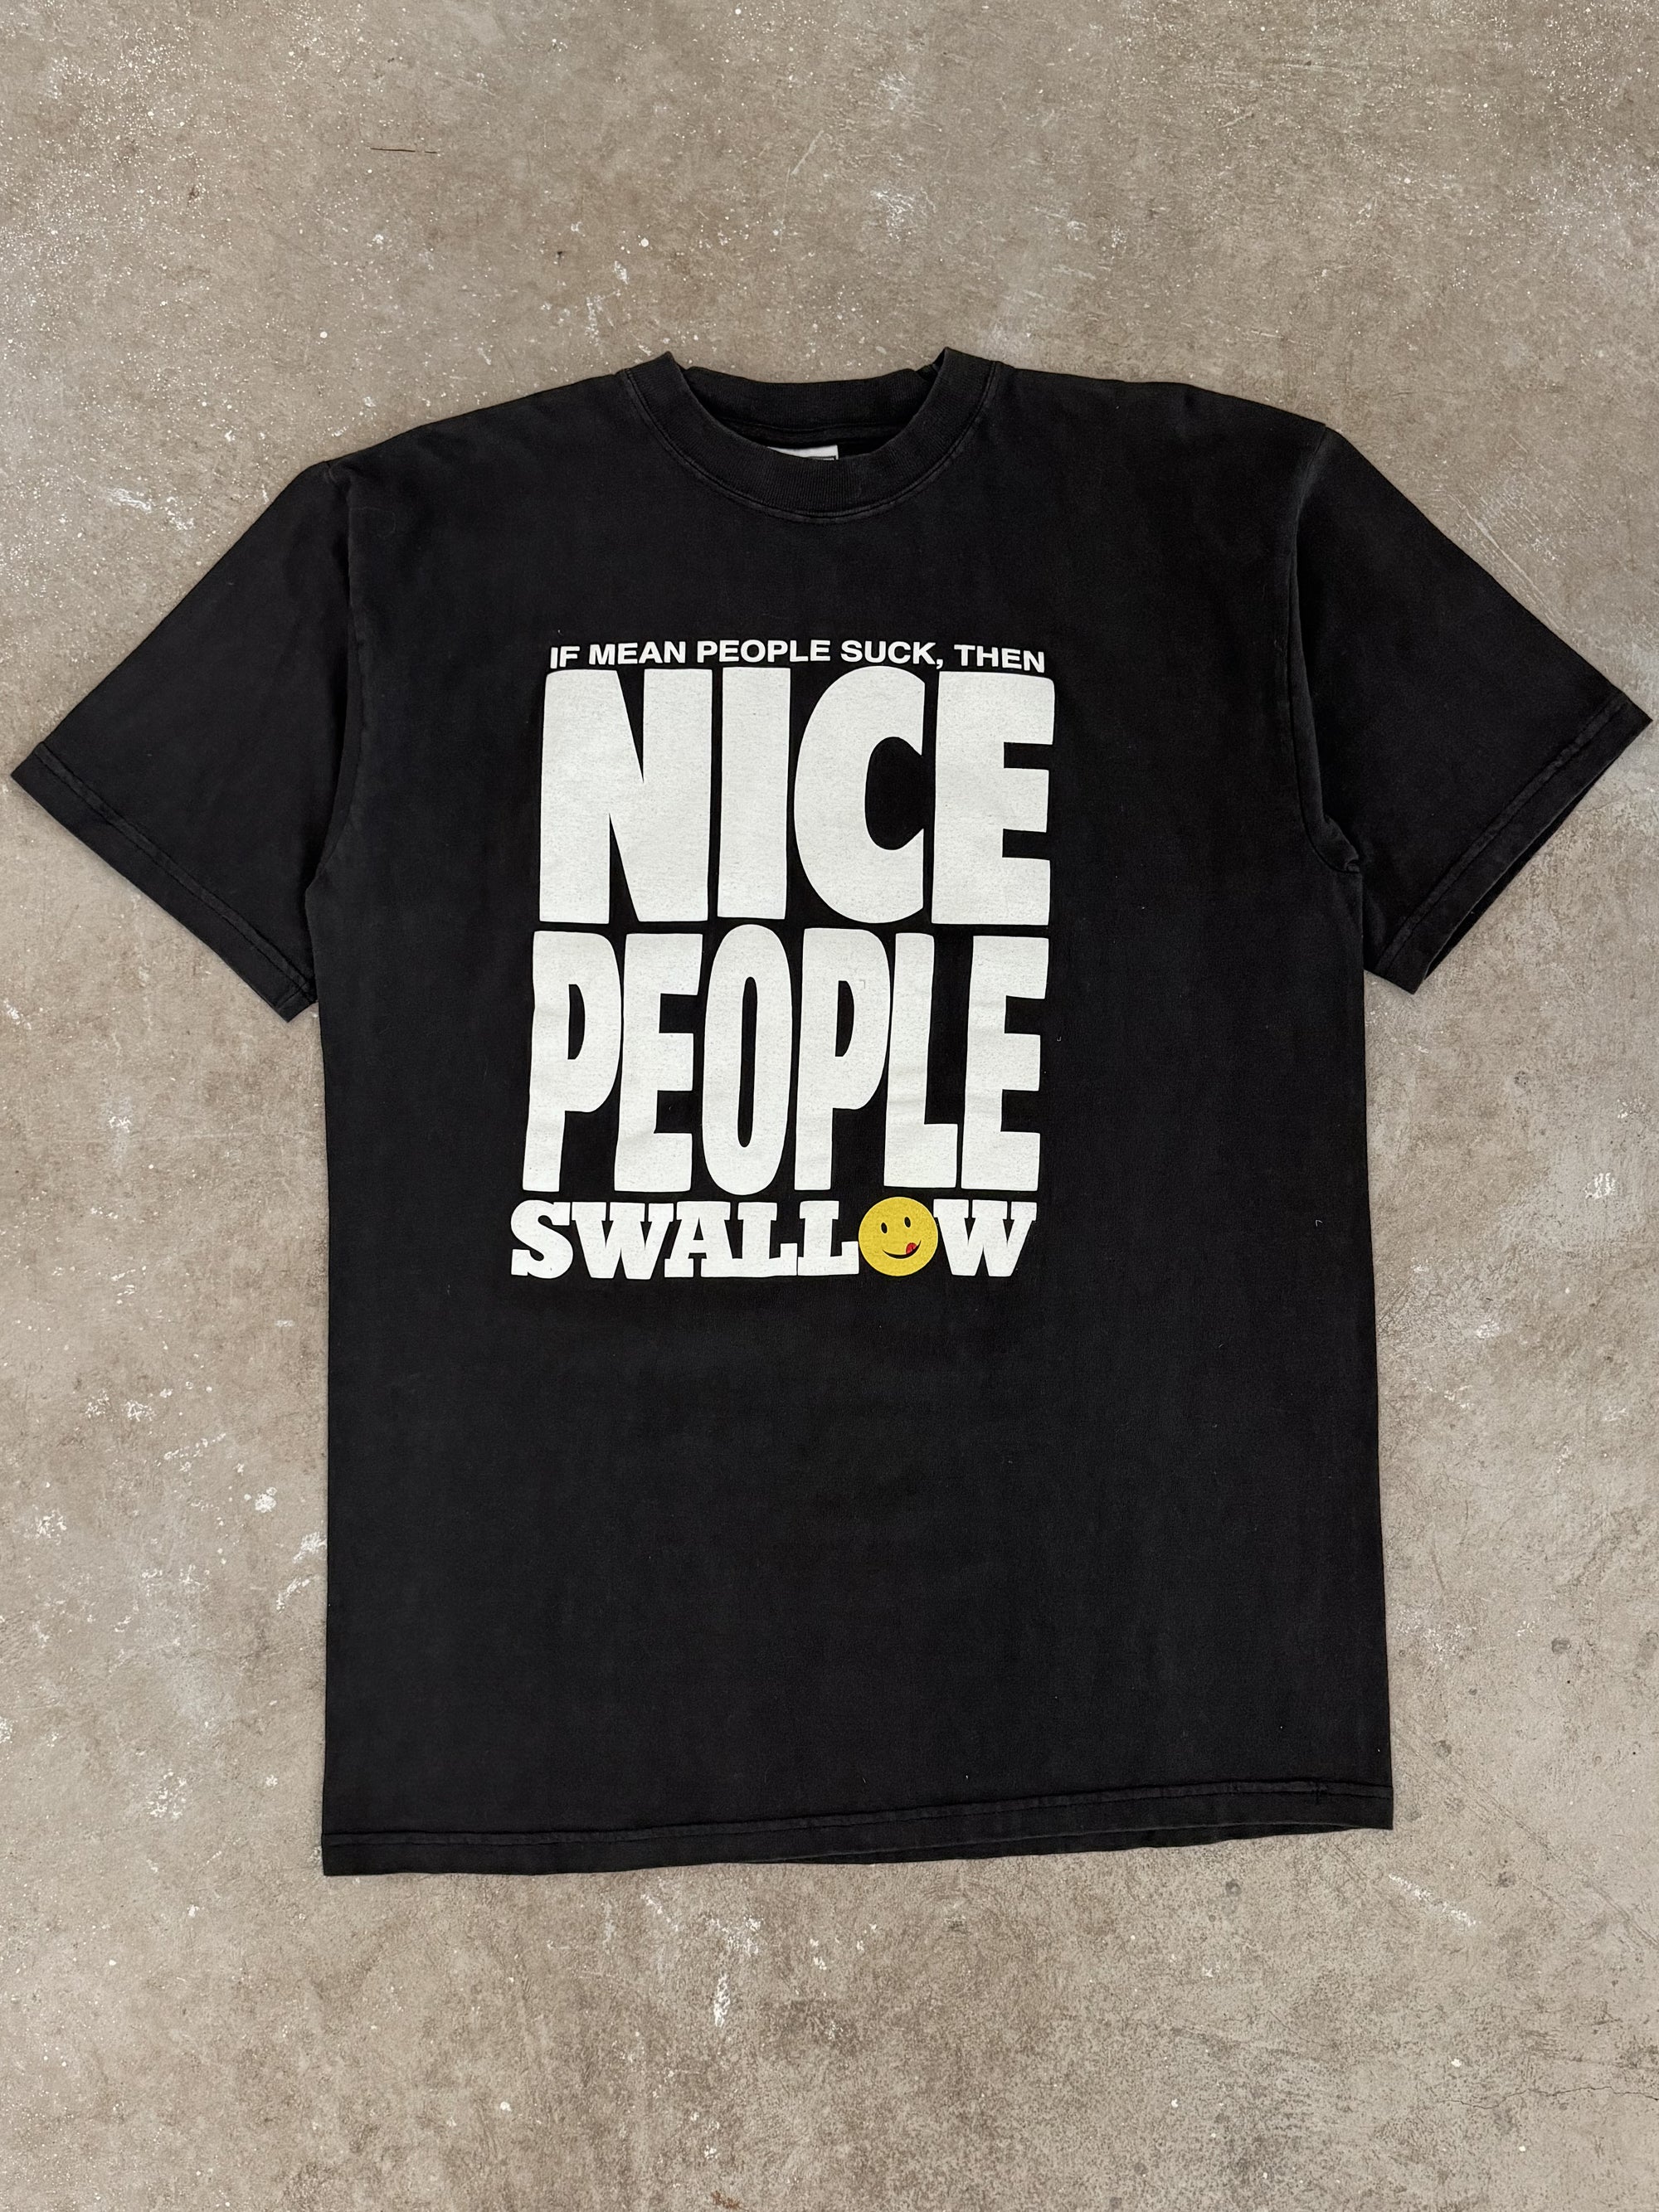 1990s "Nice People Swallow" Tee (L)